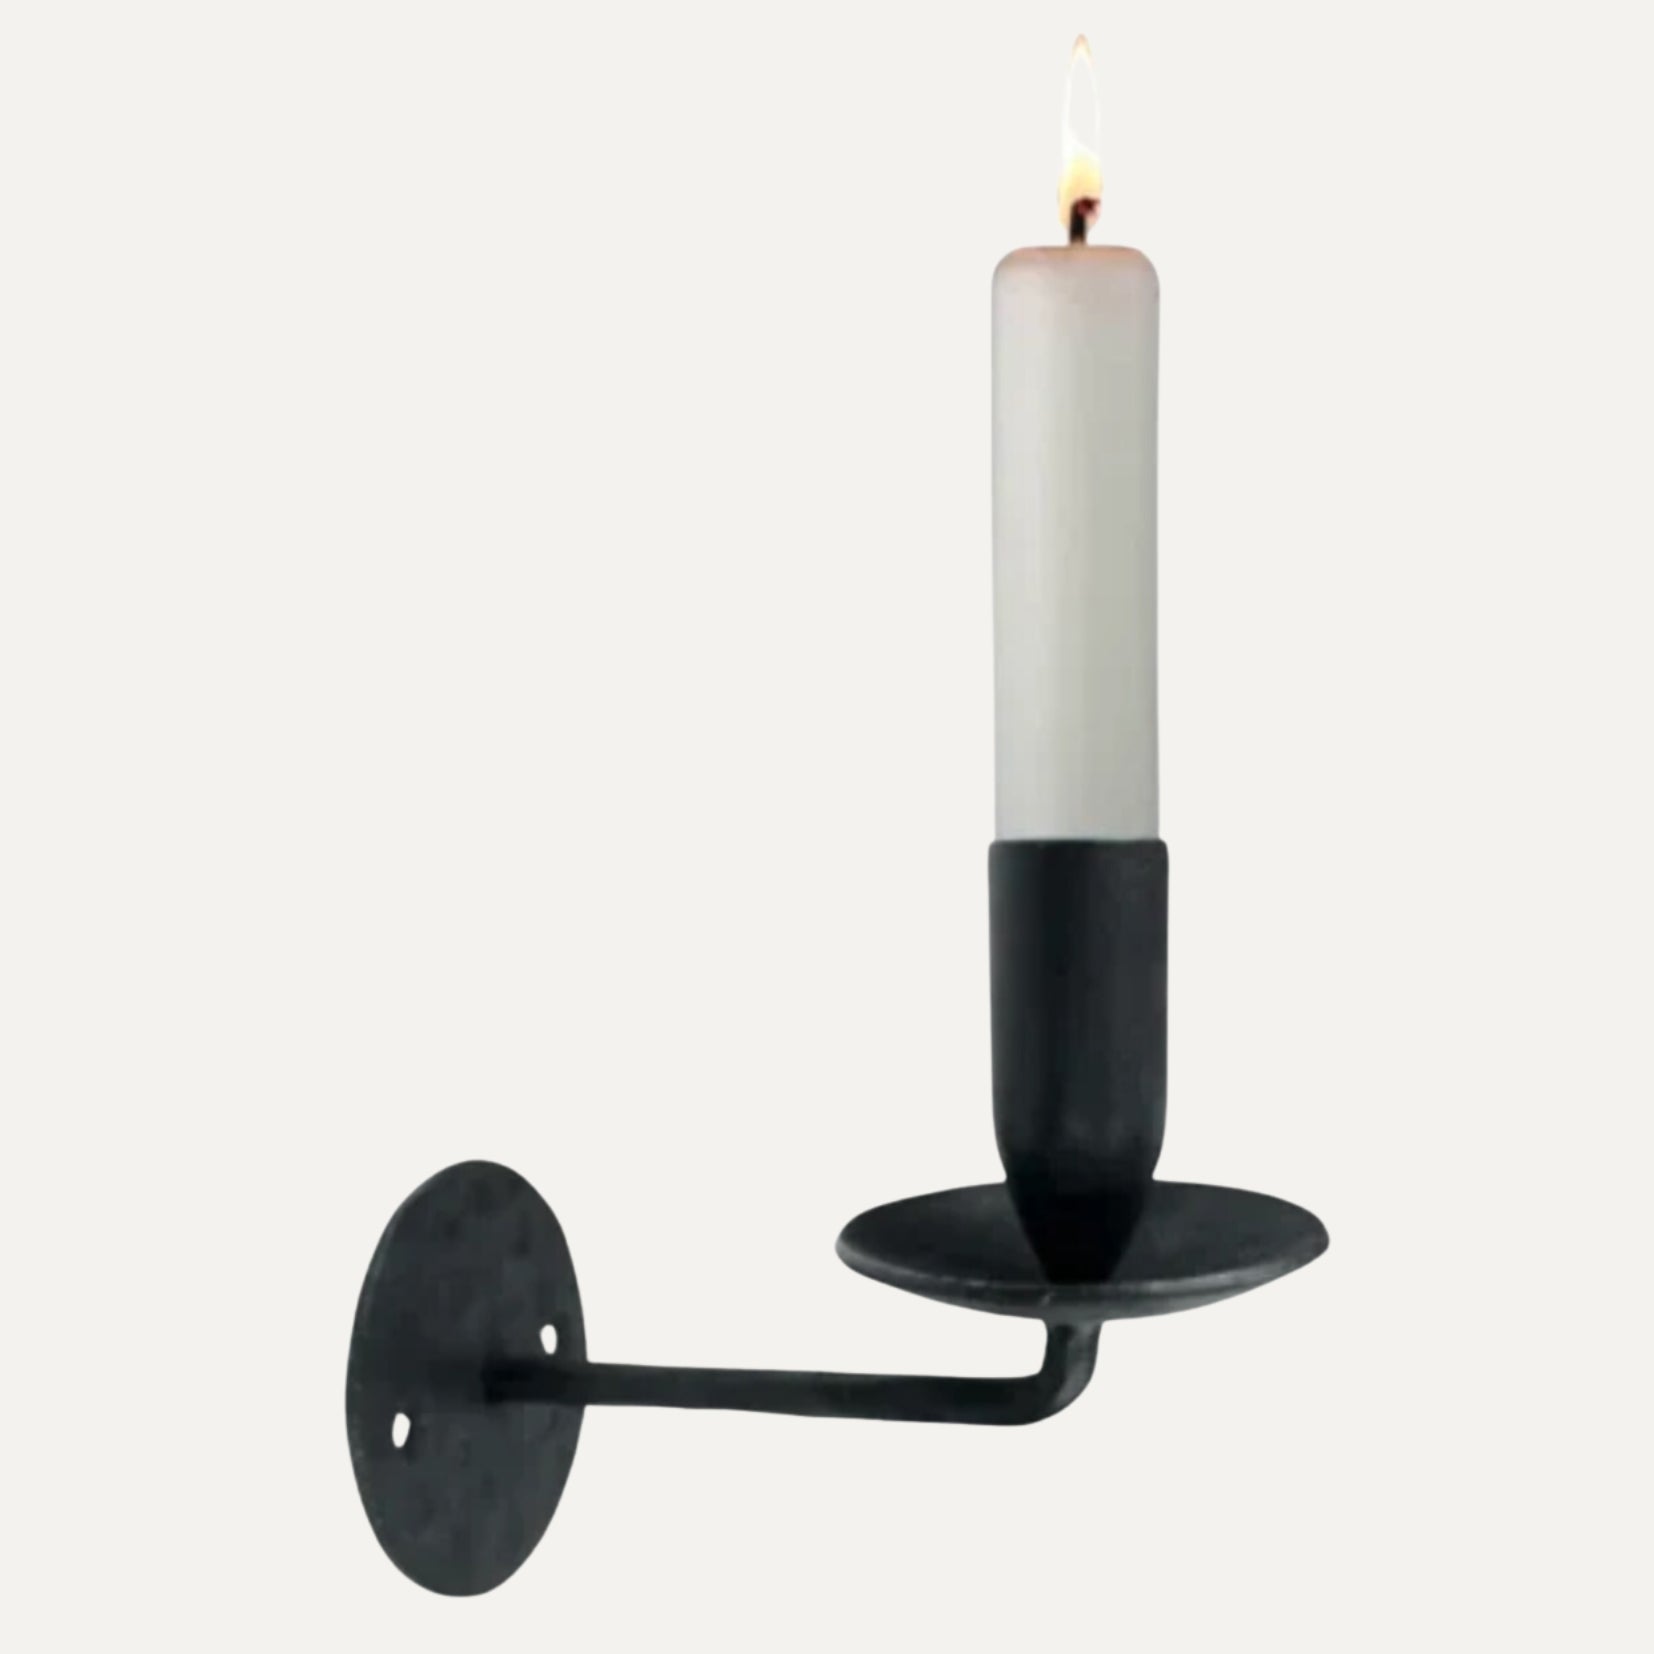 Northwood Swirl Black Wall Sconce Pillar Candle Holder - #284A0